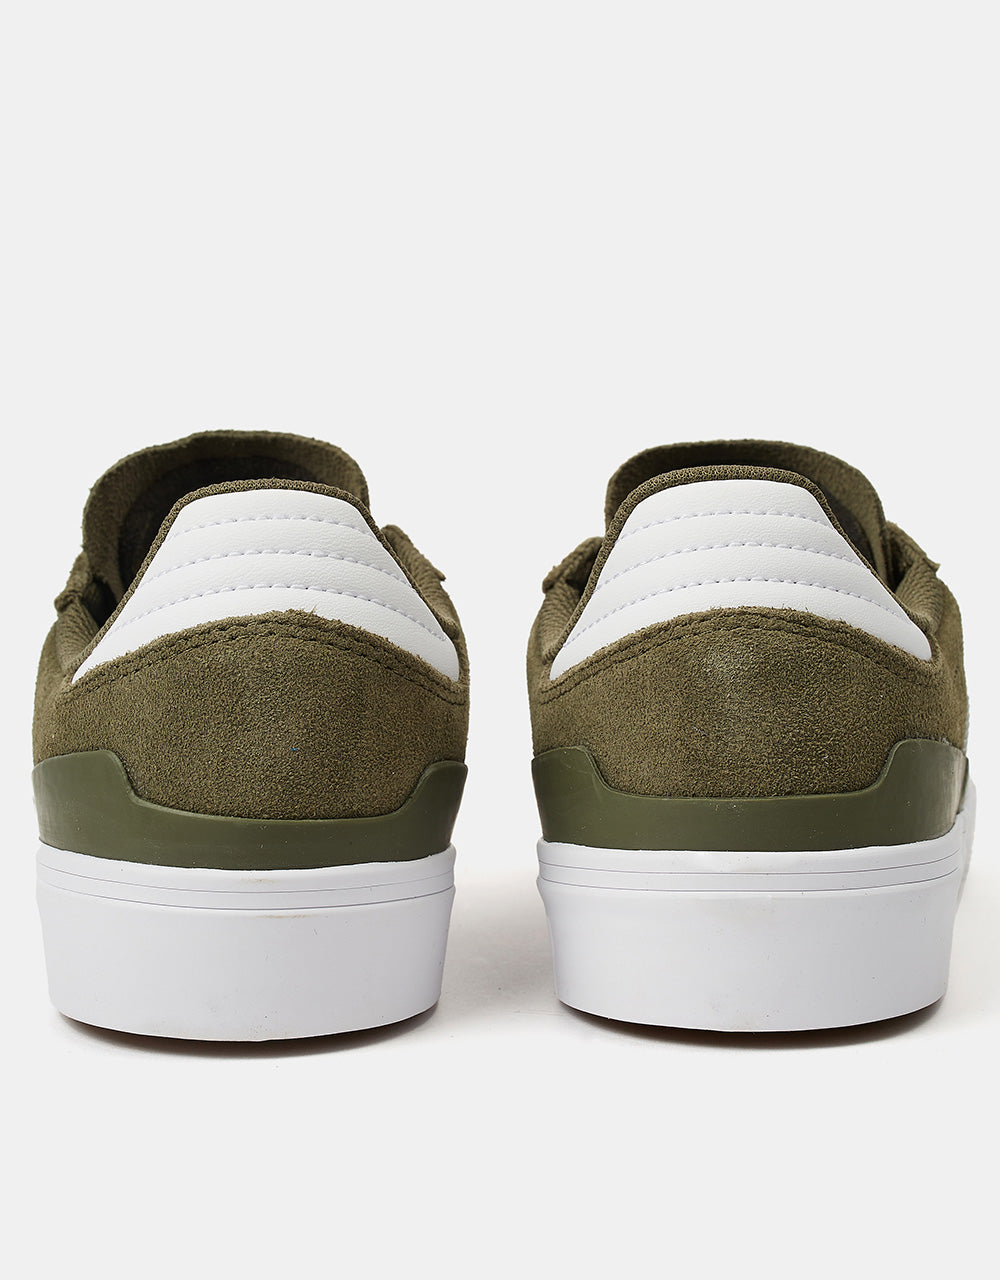 adidas Busenitz Vulc II Skate Shoes - Olive Strata/White/Gold Metallic